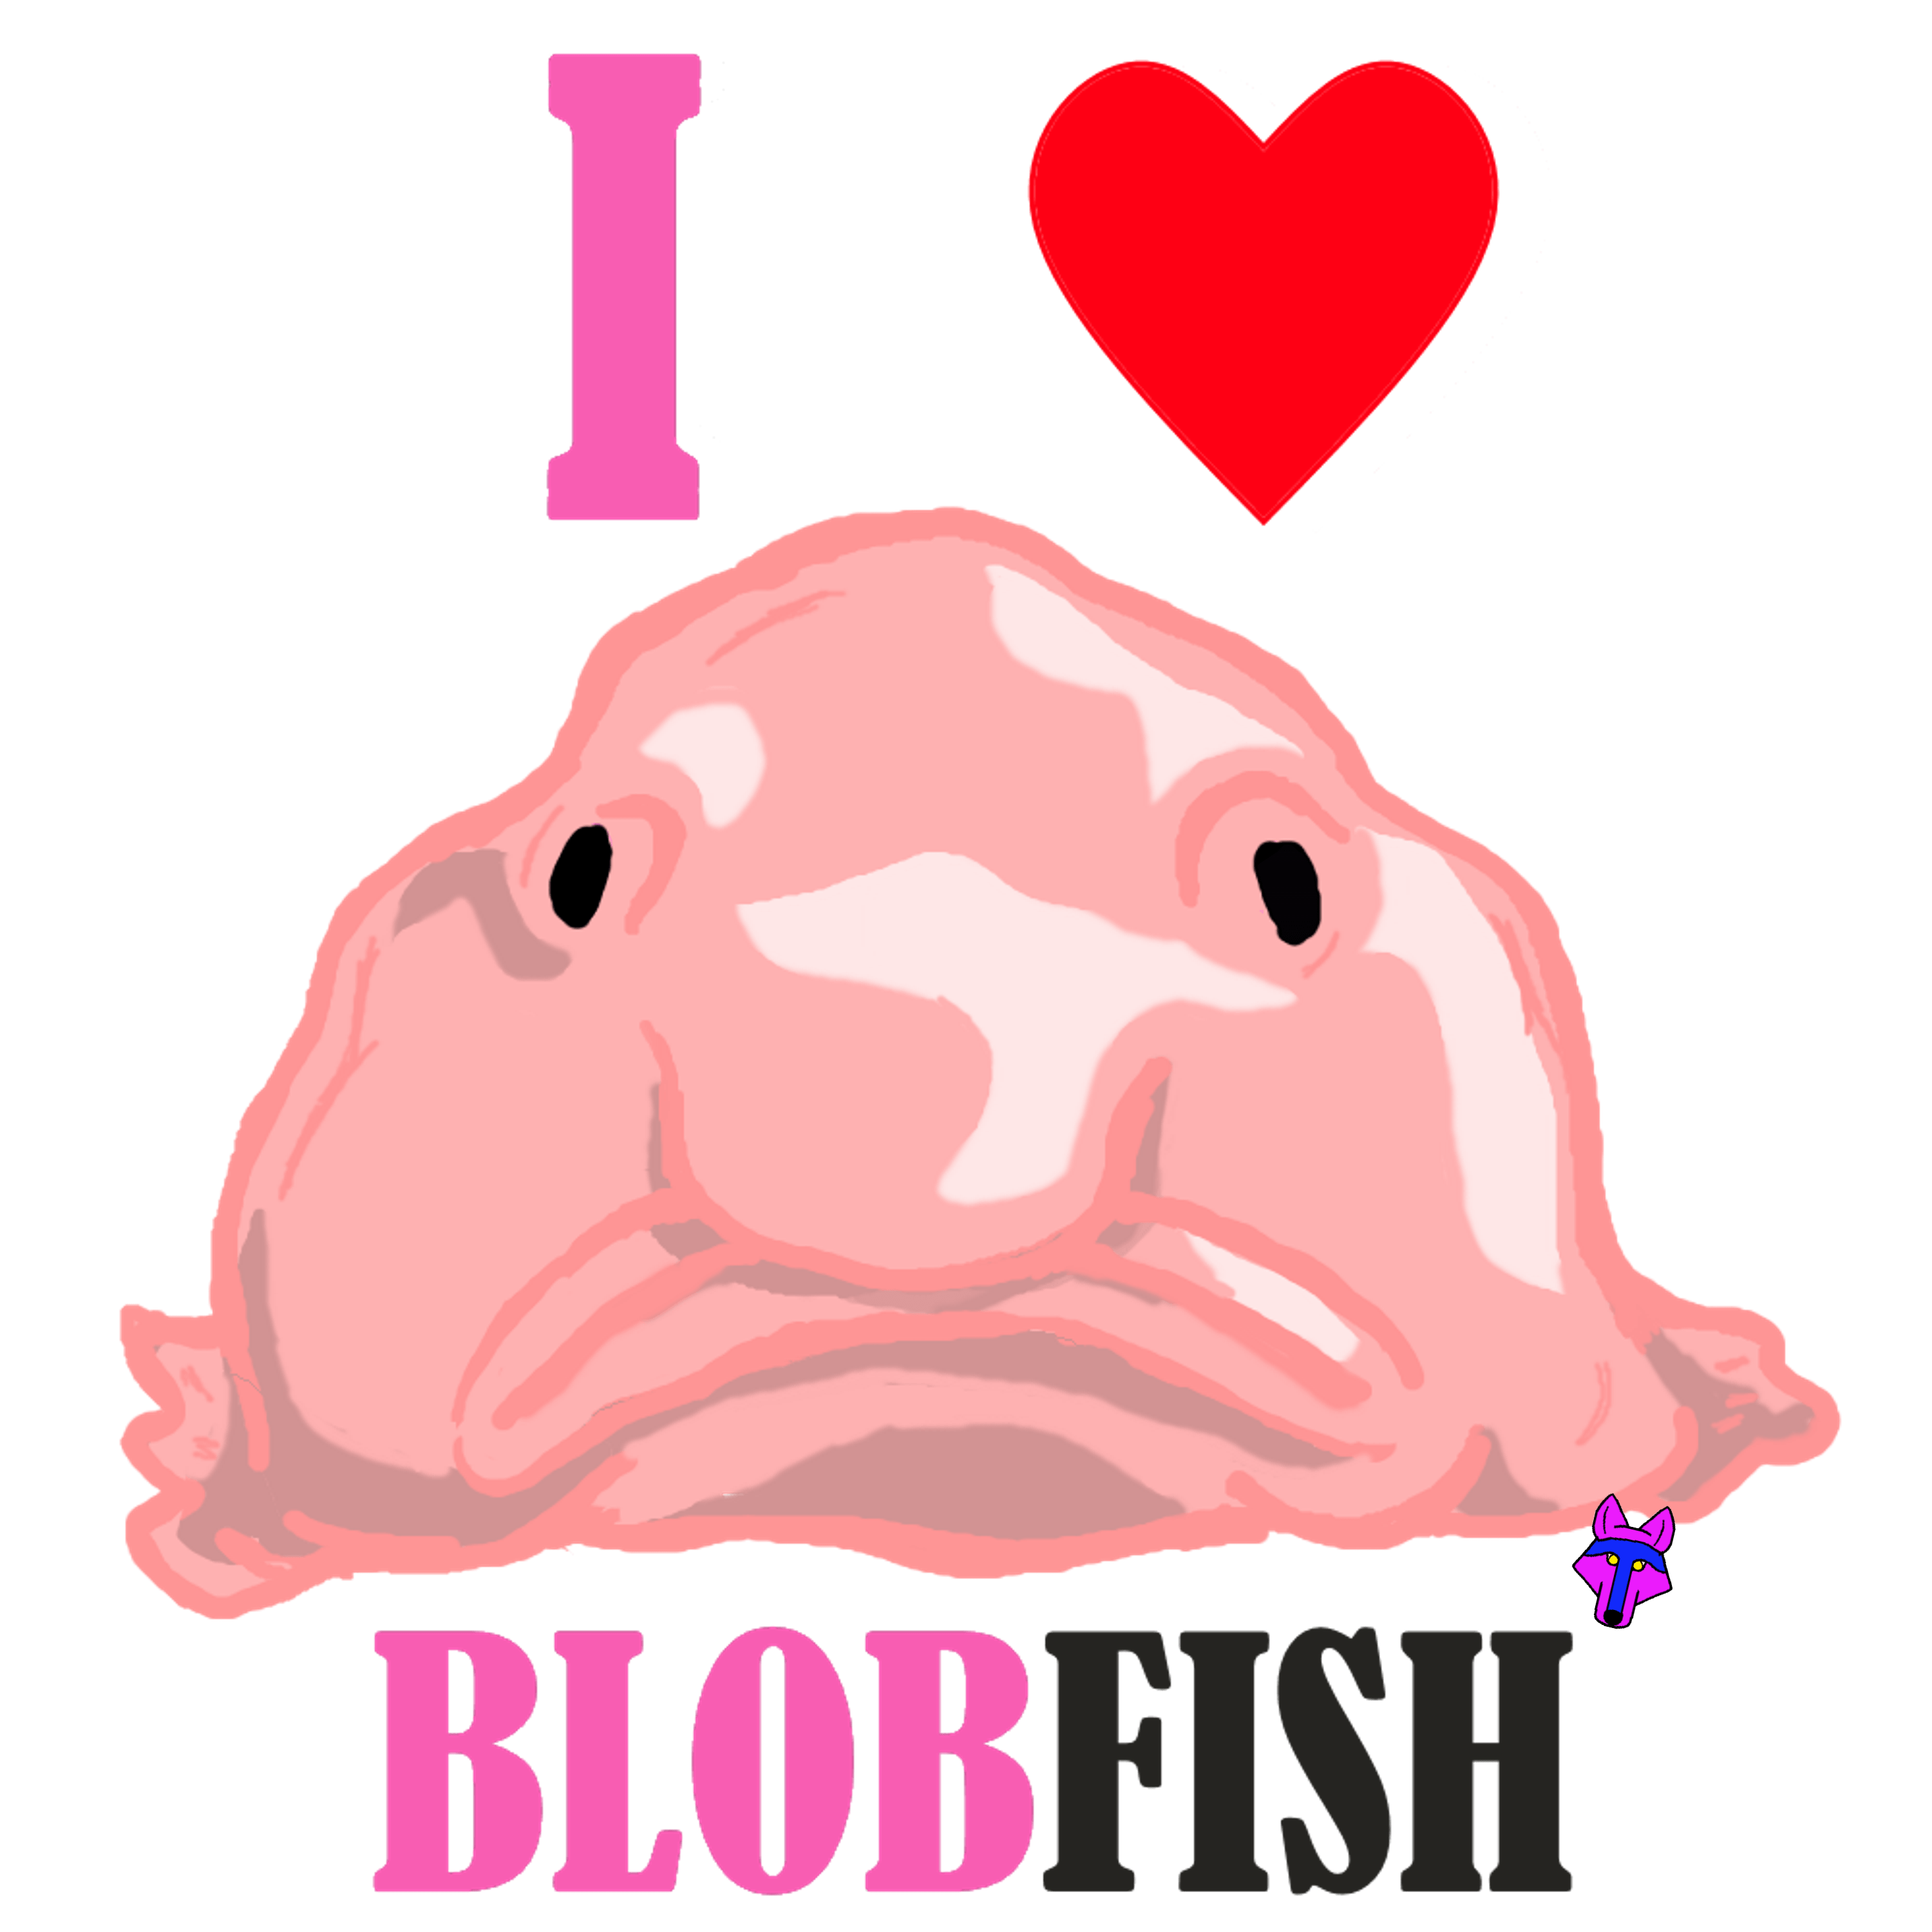 blobfish. Blobfish, Weird fish, Pets 3